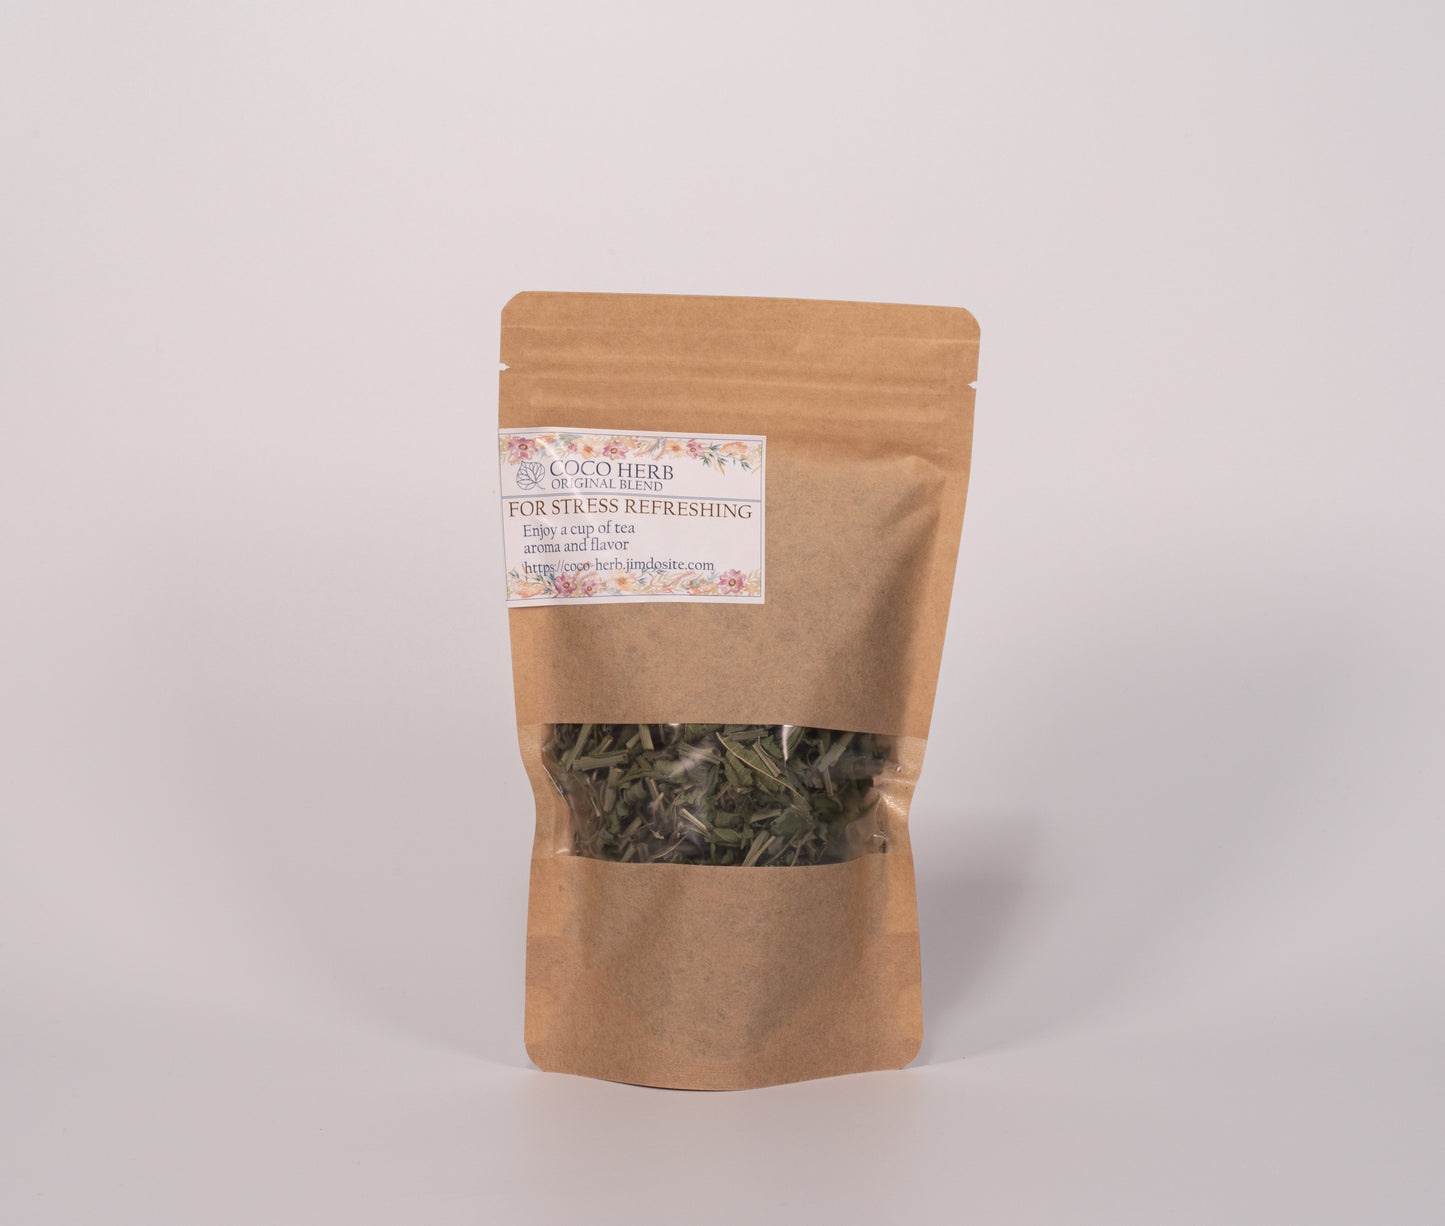 Herb tea “FOR STRESS REFRESHING” 20g